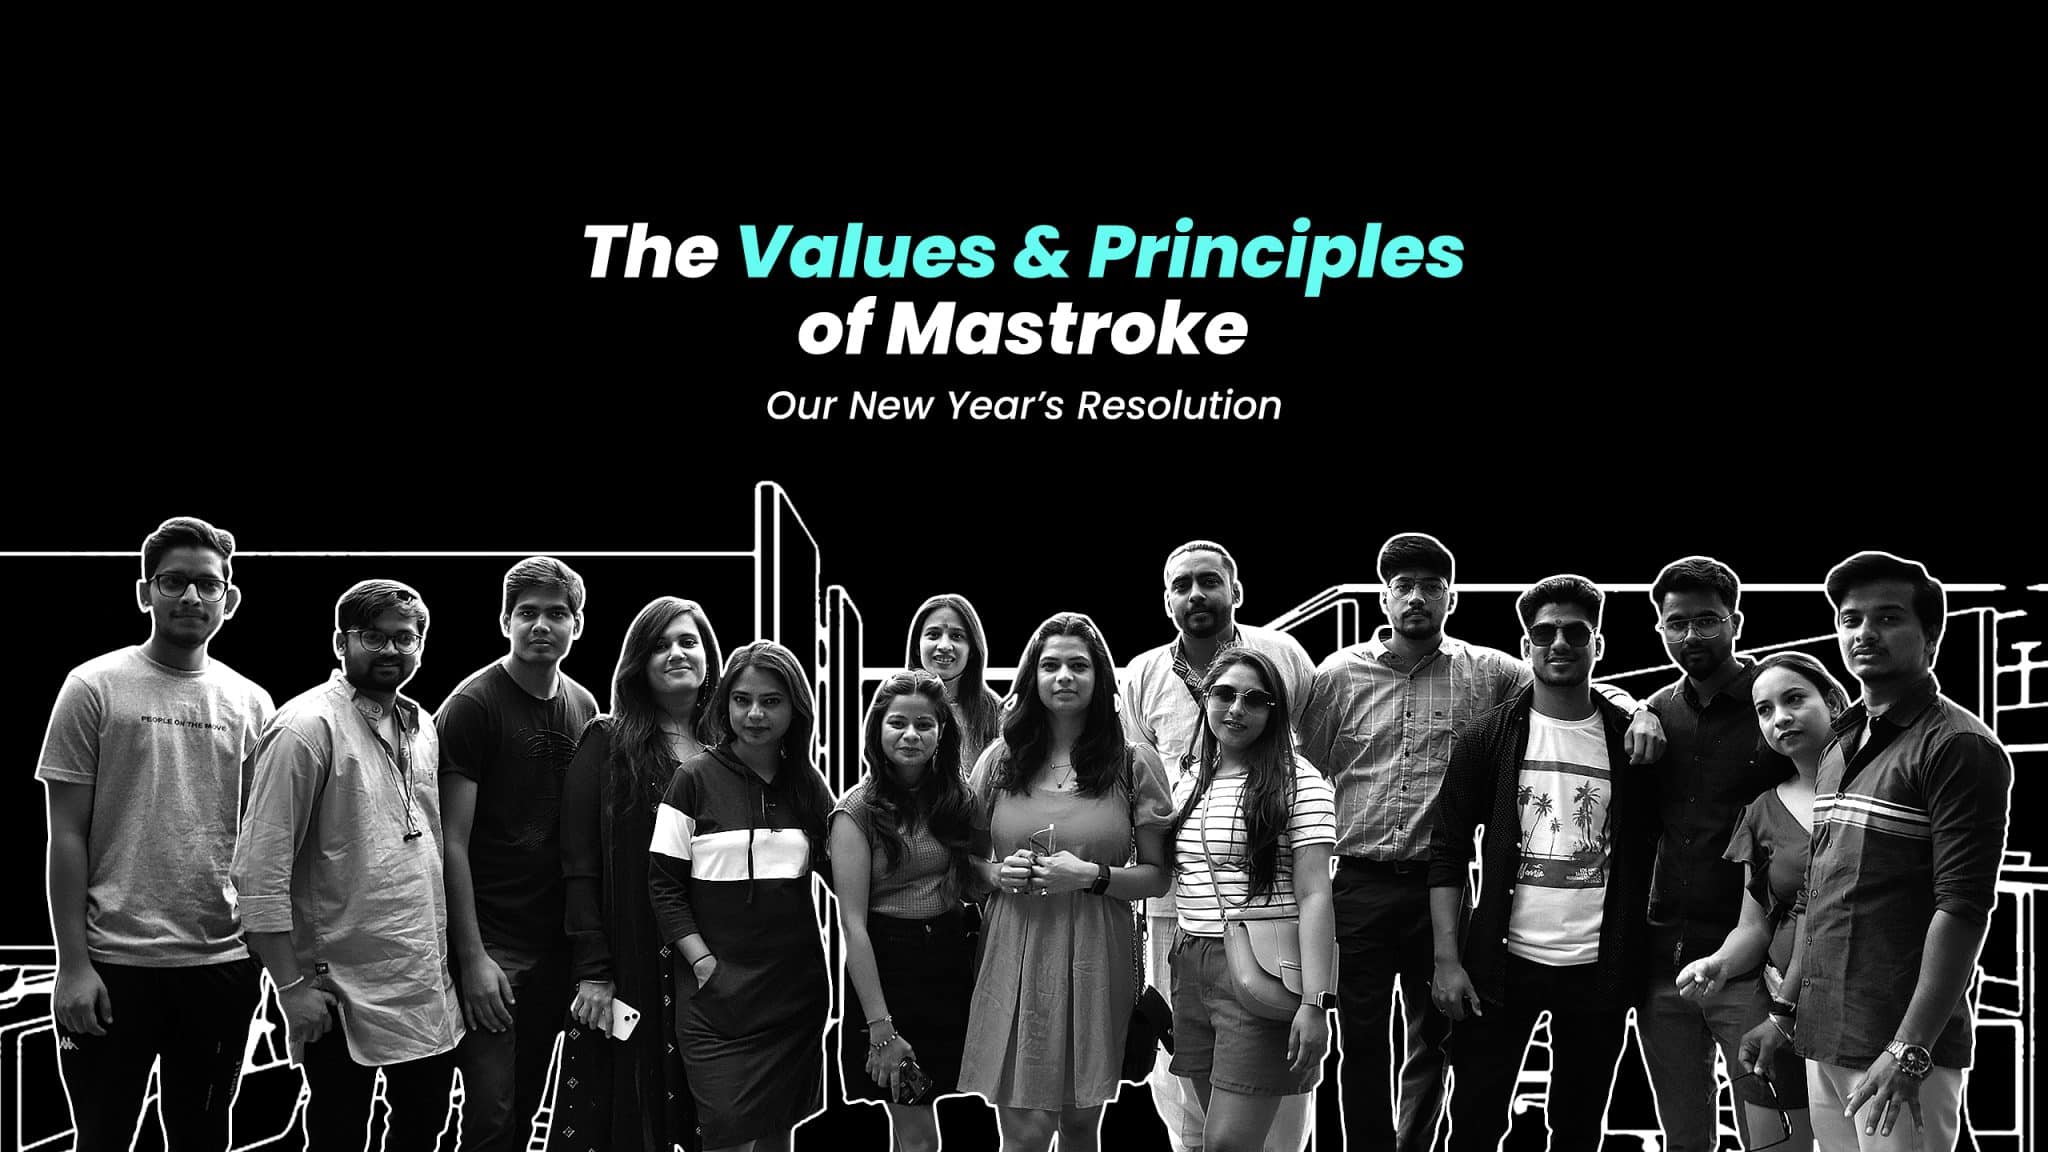 Mastroke values and principles team meet of leaders